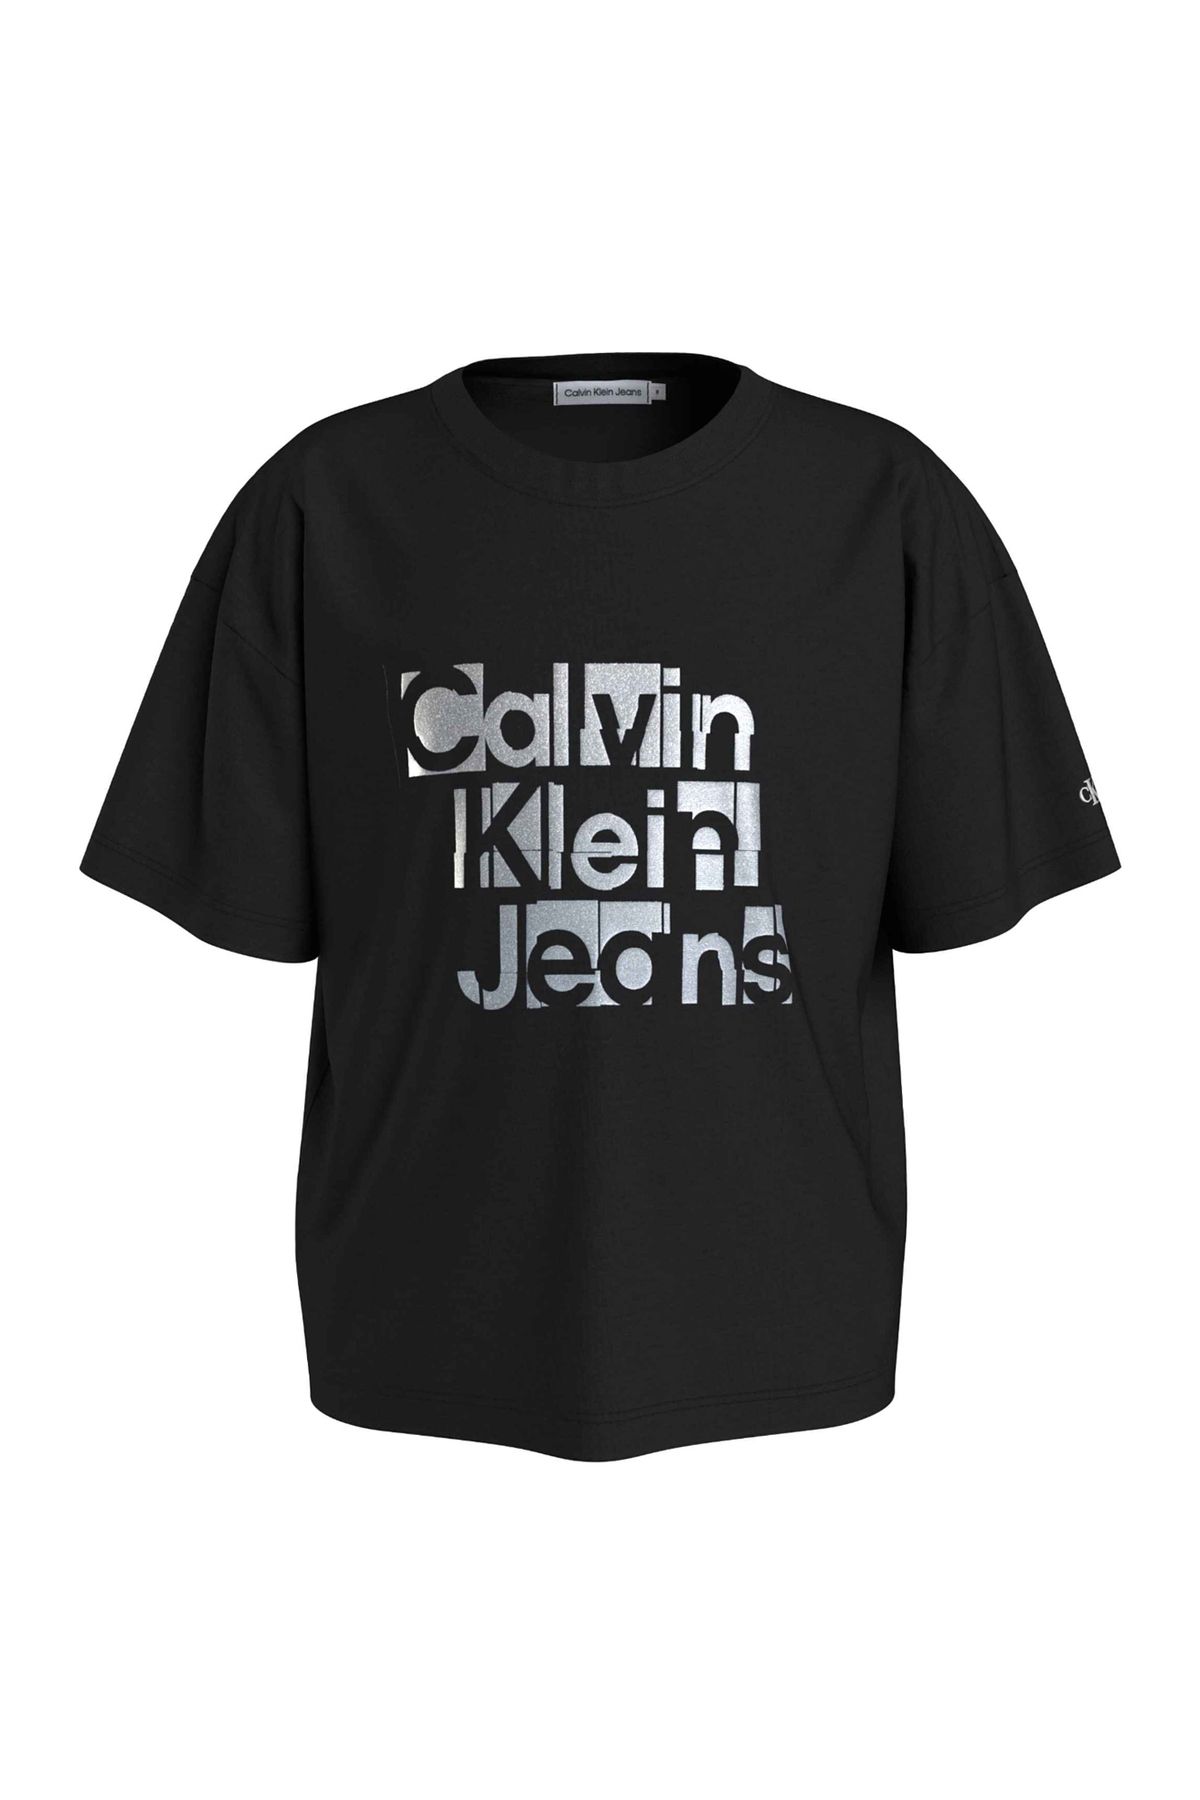 Calvin Klein Calvin Klein تی‌شرت زنانه مشبک متالیک با الگوی چاپ شده کلوین کلین